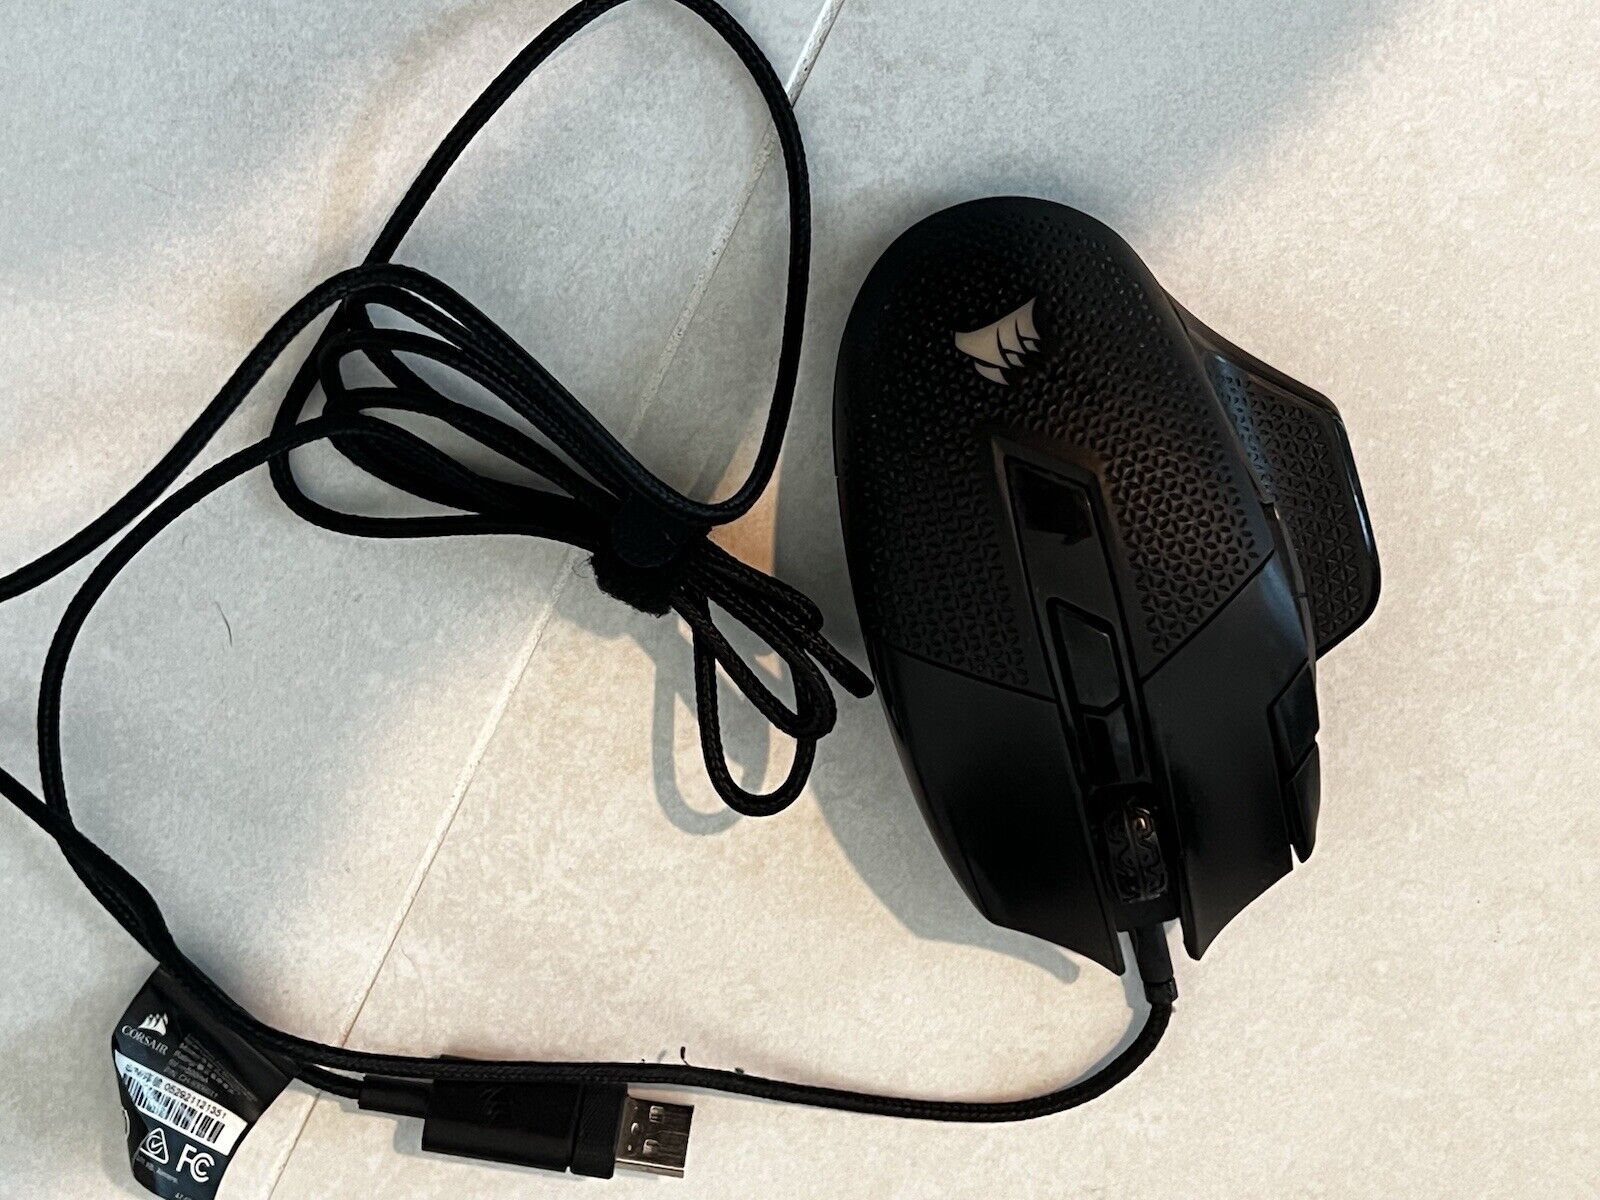 Corsair Nightsword RGB Gaming Mouse - Black (CH-9306011-NA) Model RGP0073